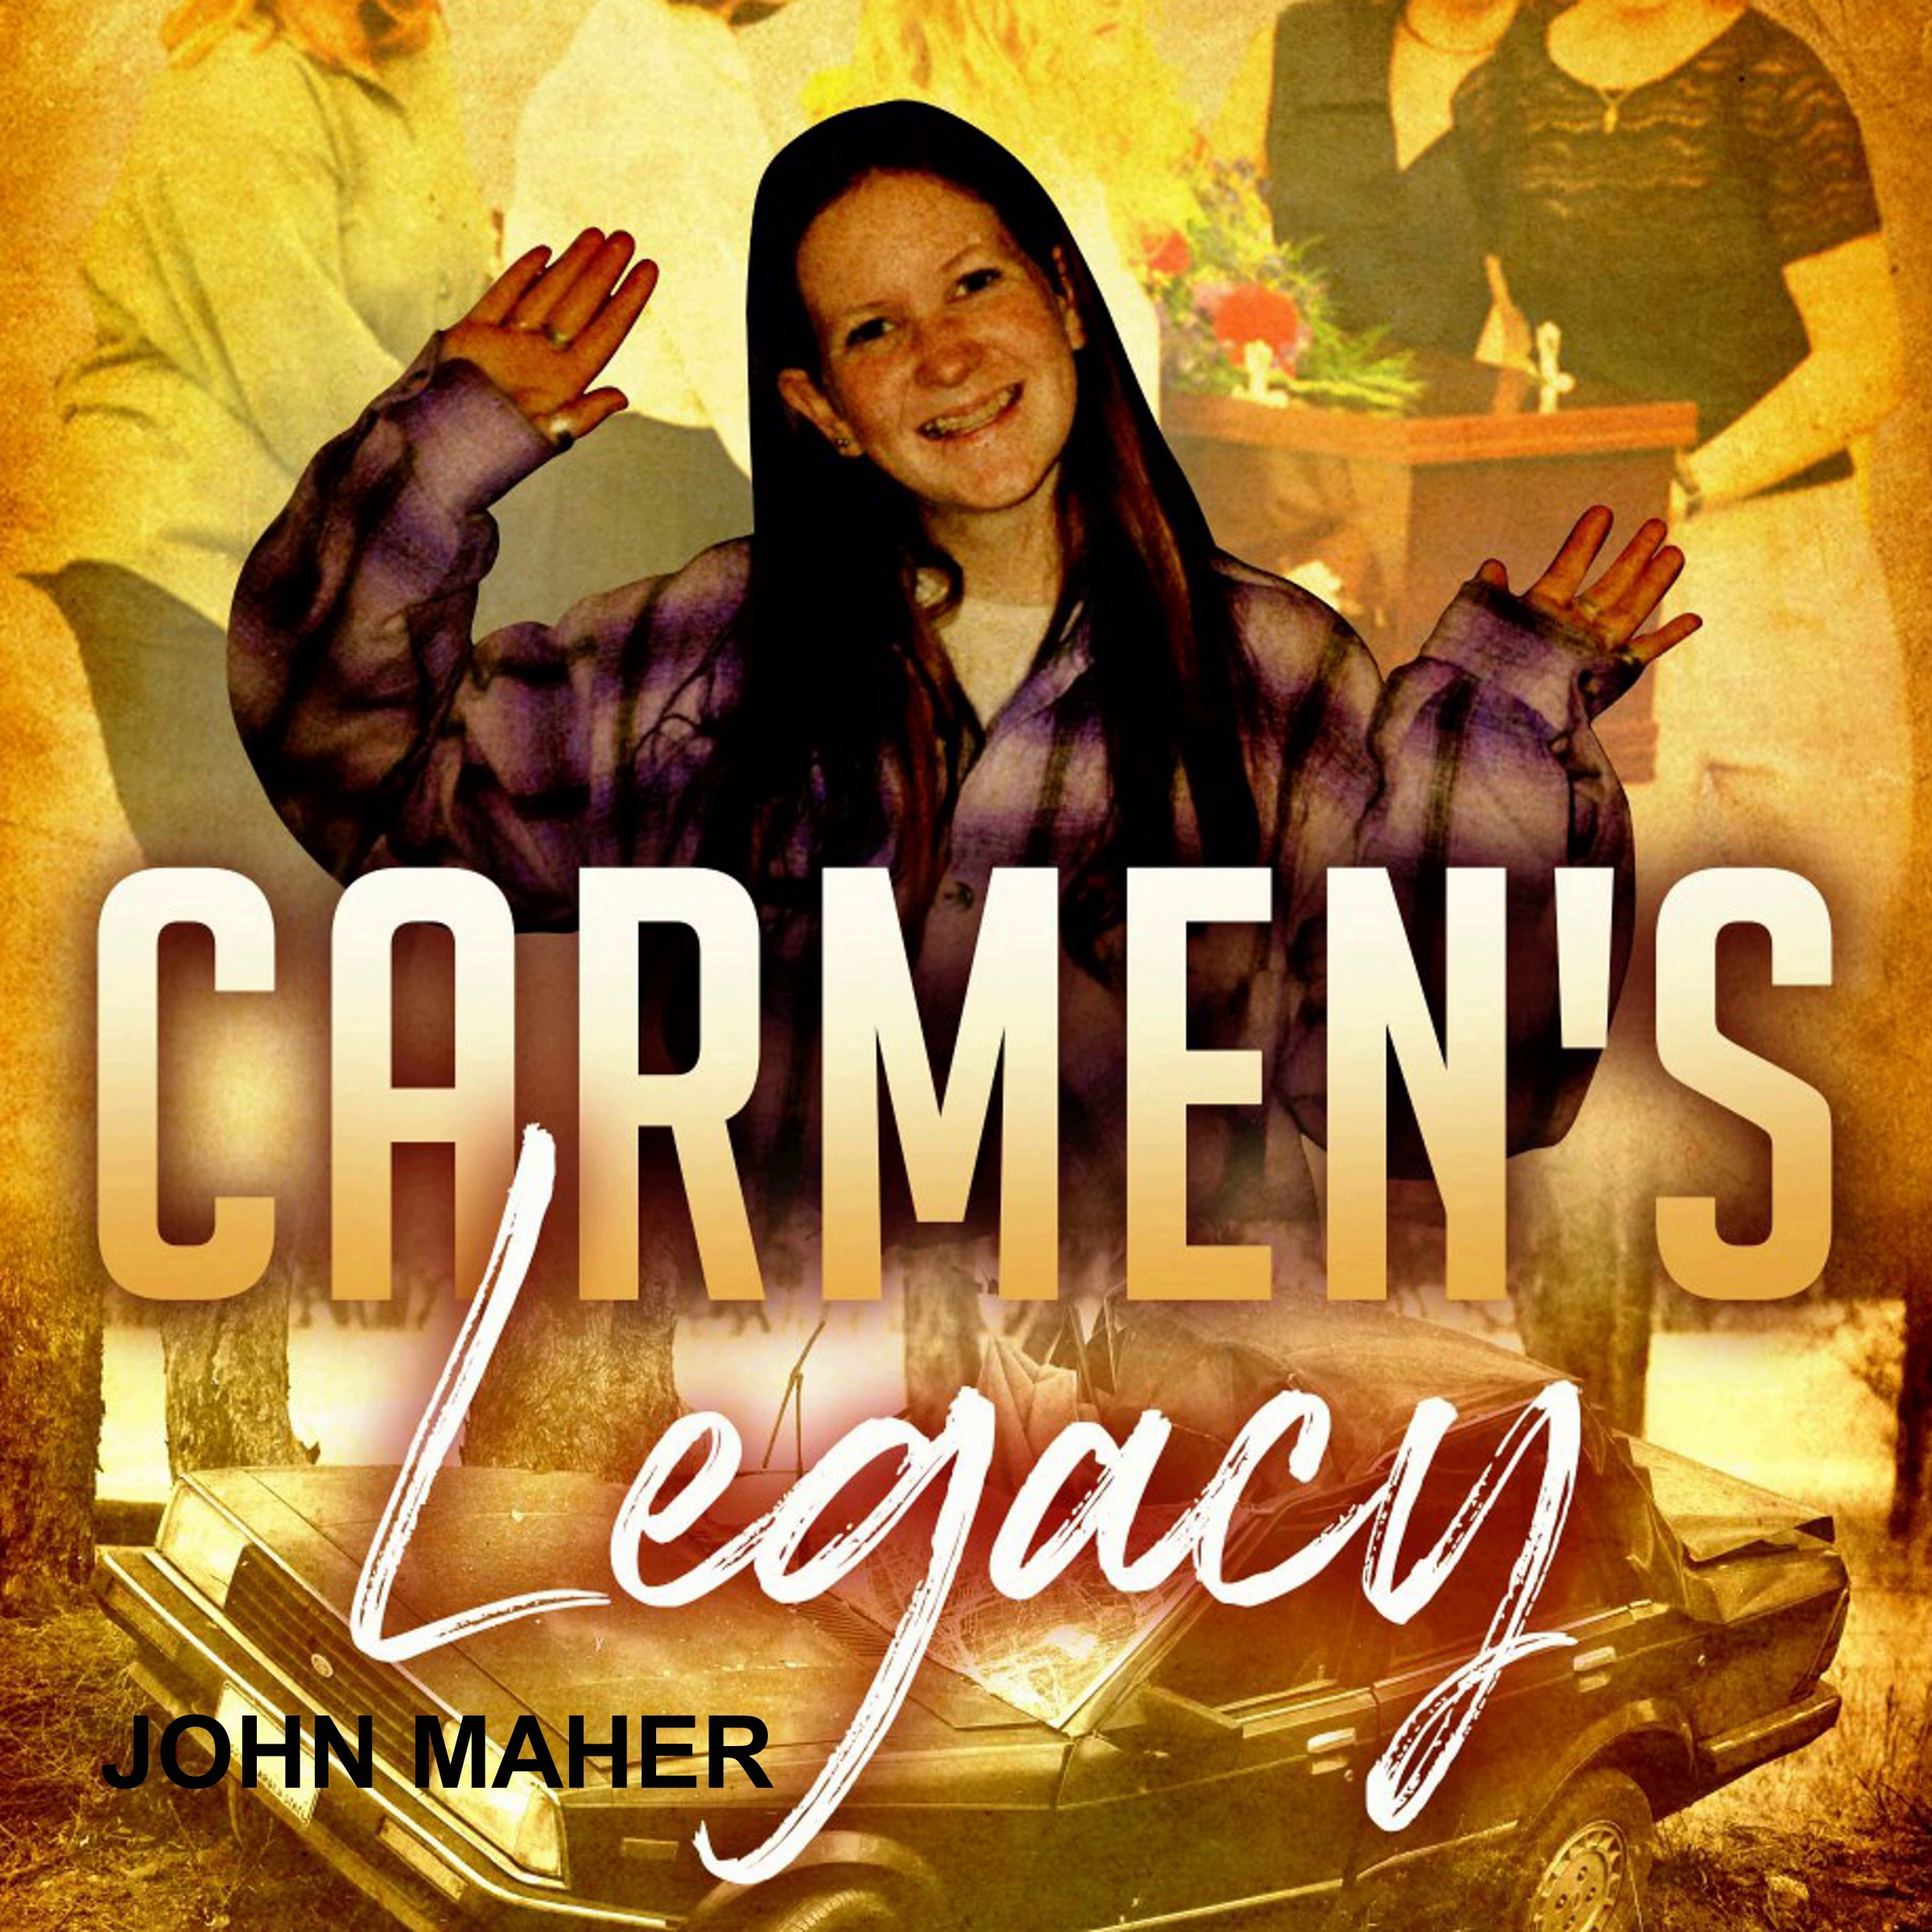 Carmen's Legacy by John Maher Audiobook